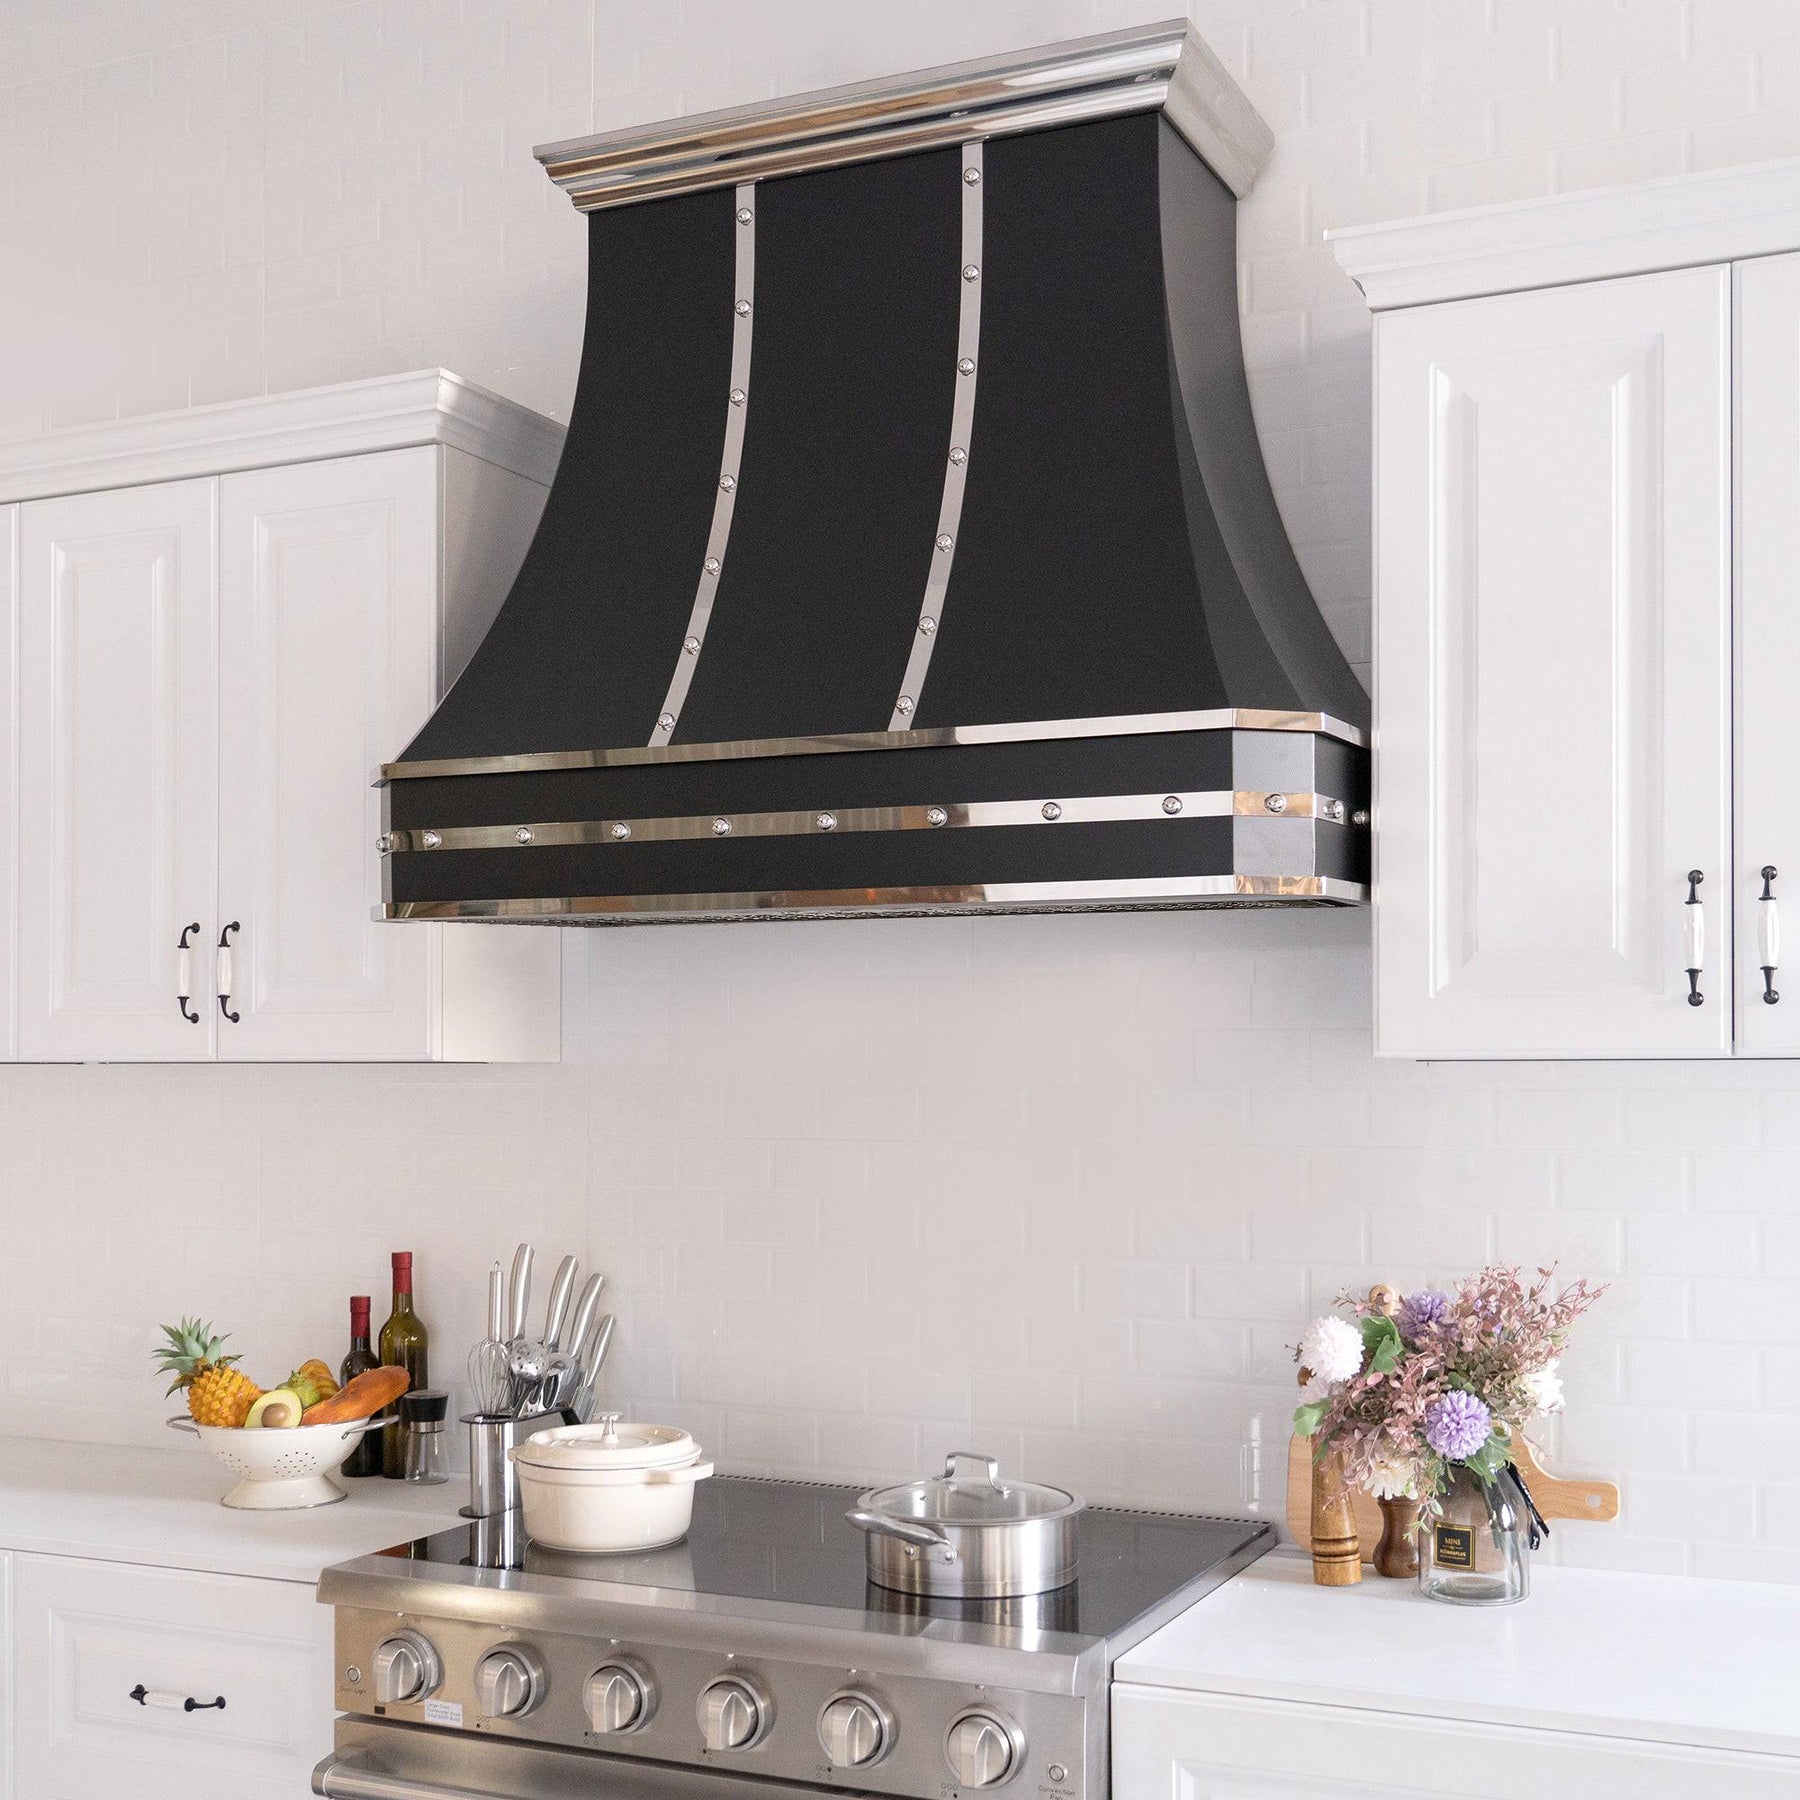 Fobest Custom Black Stainless Steel Kitchen Hood with Straps FSS-57 - Stainless Steel Range Hood-Fobest Appliance